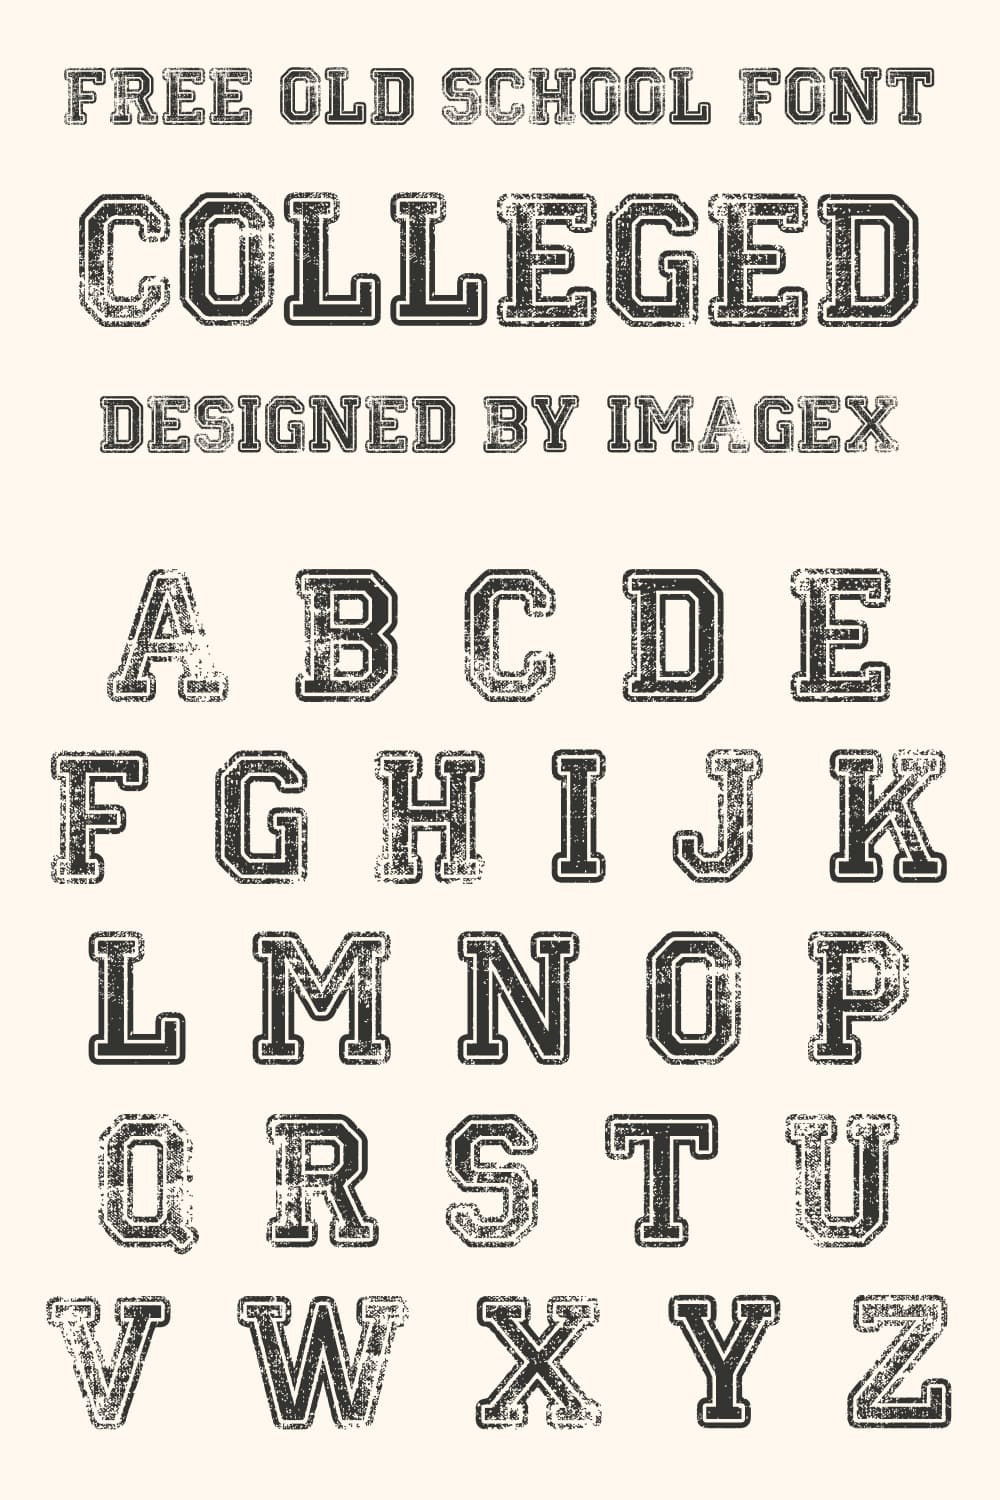 Free college font - Pinterest.